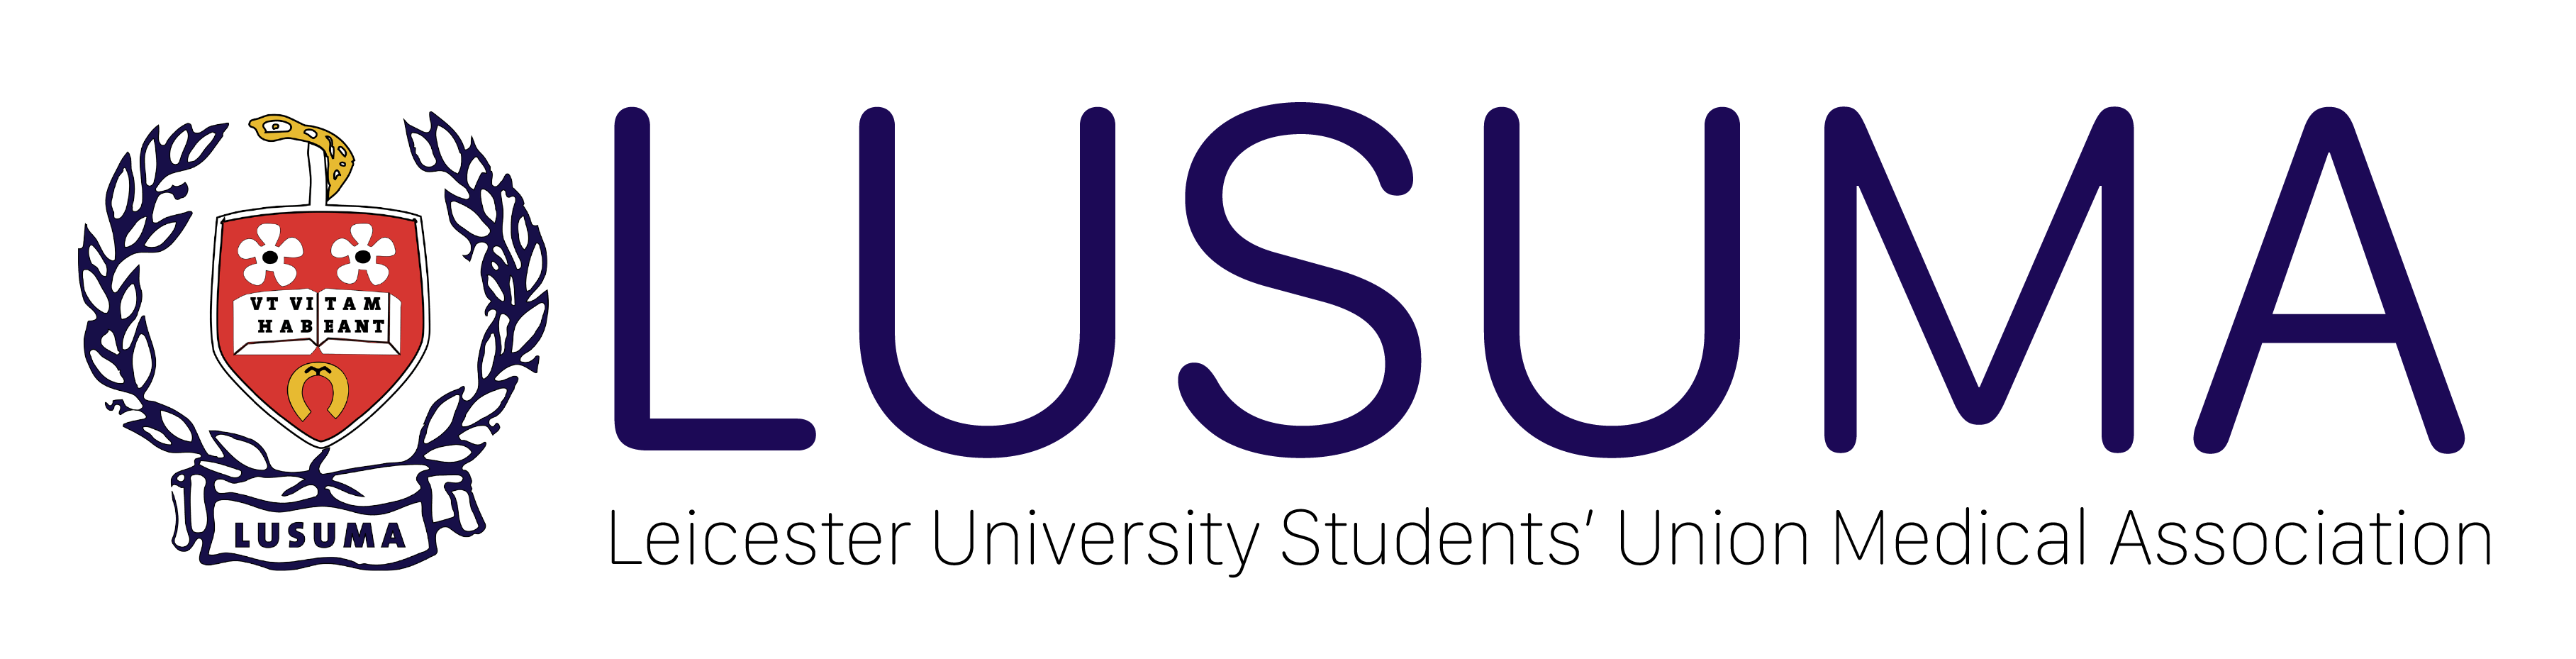 LUSUMA - Leicester University Students' Union Medical Assosciation